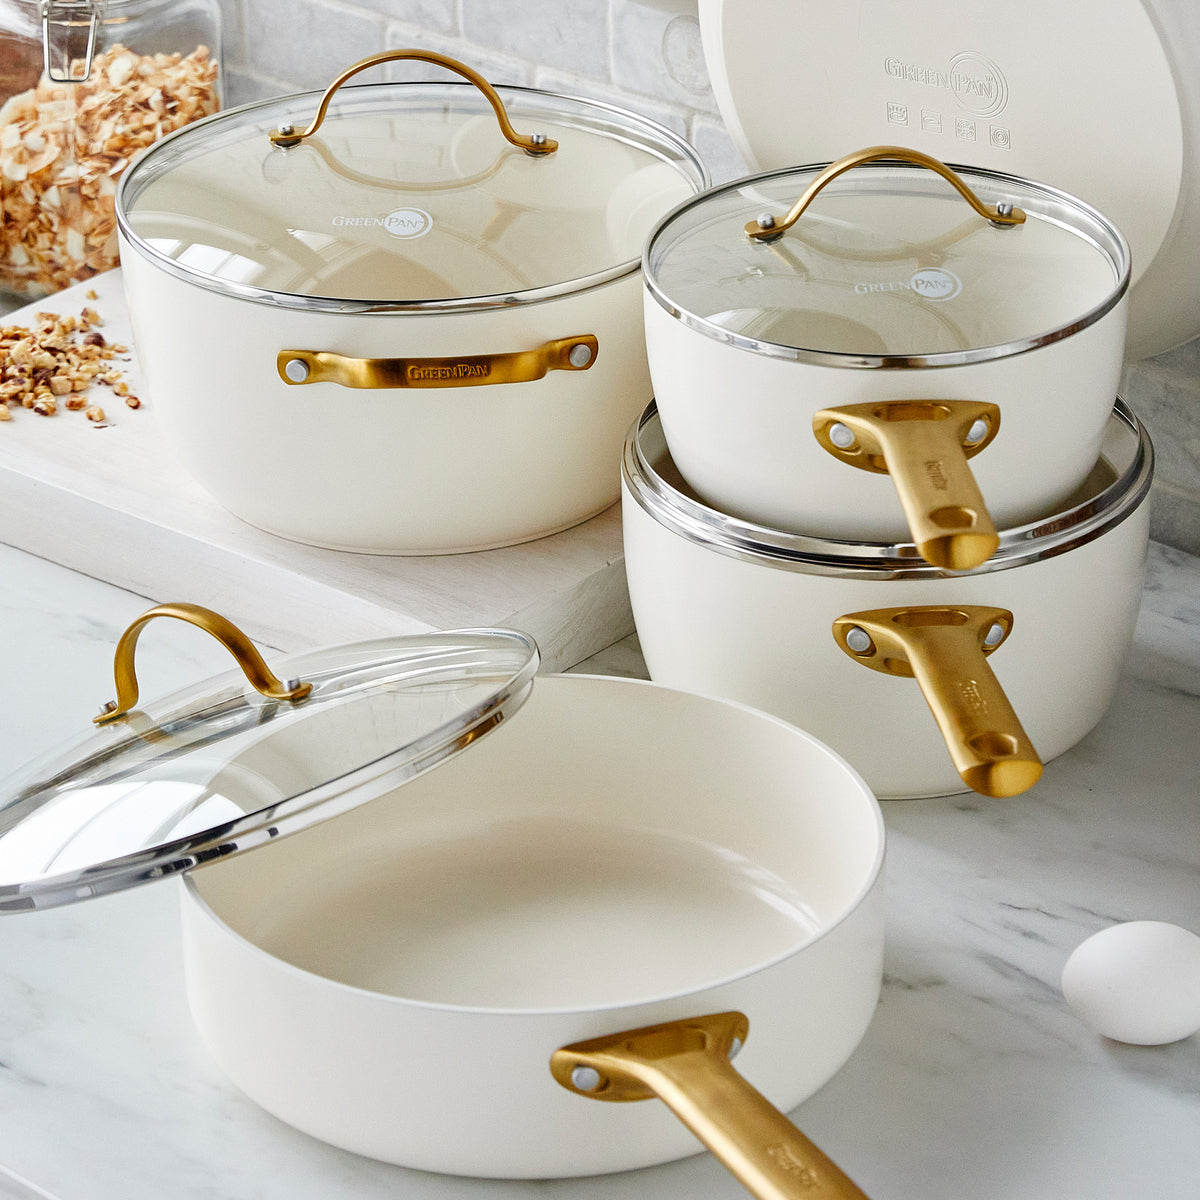 Reserve Ceramic Nonstick 10-Piece Cookware Set, Cream with Gold-Tone